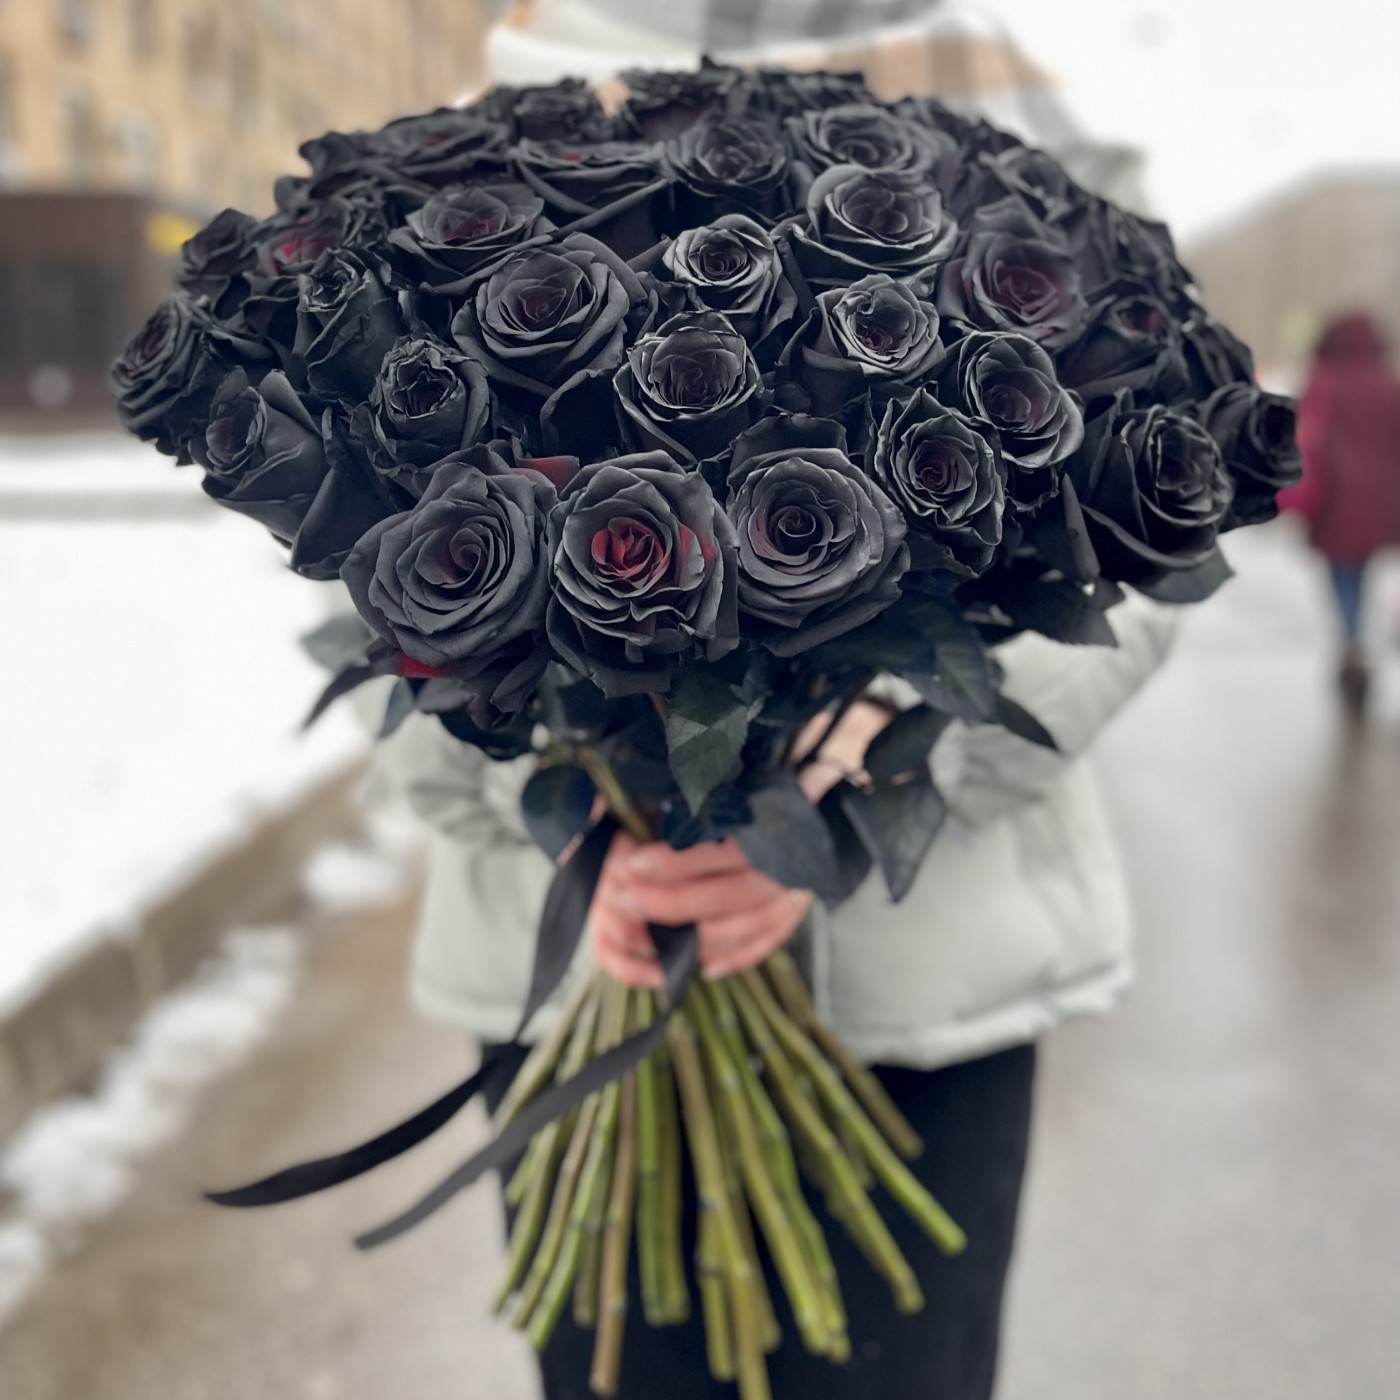 Траурный букет черных роз